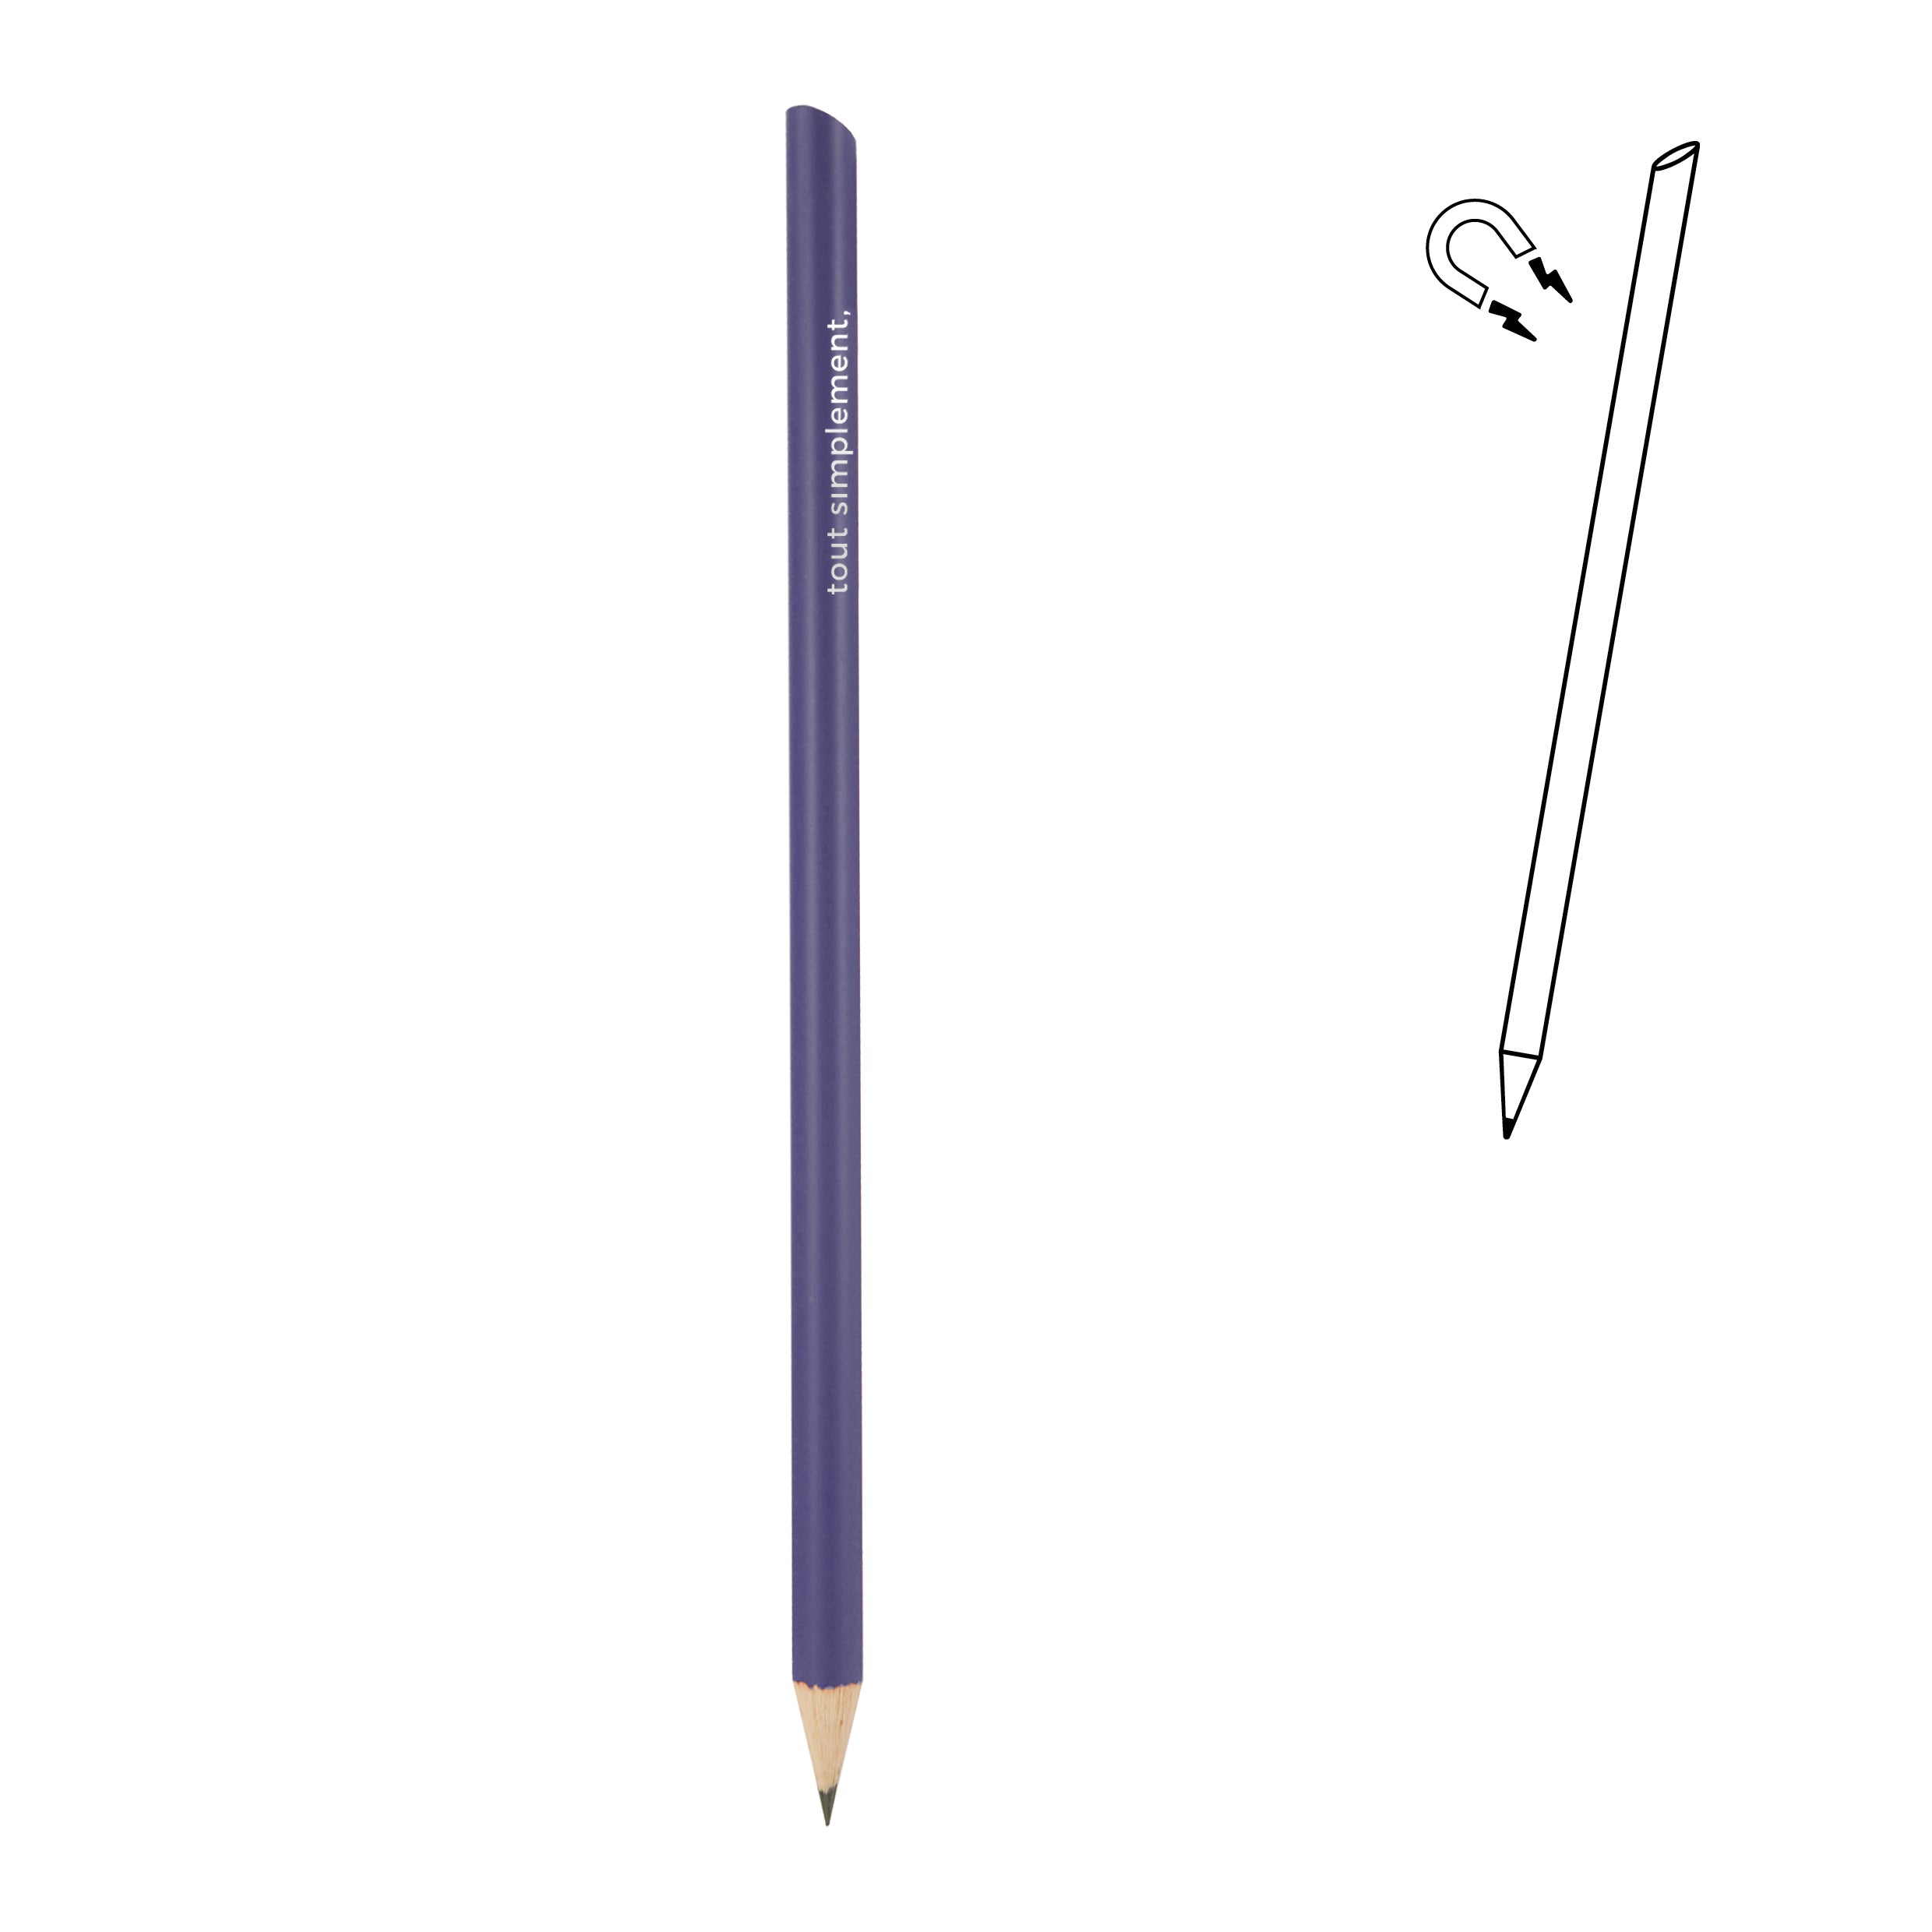 Magnetic pencil